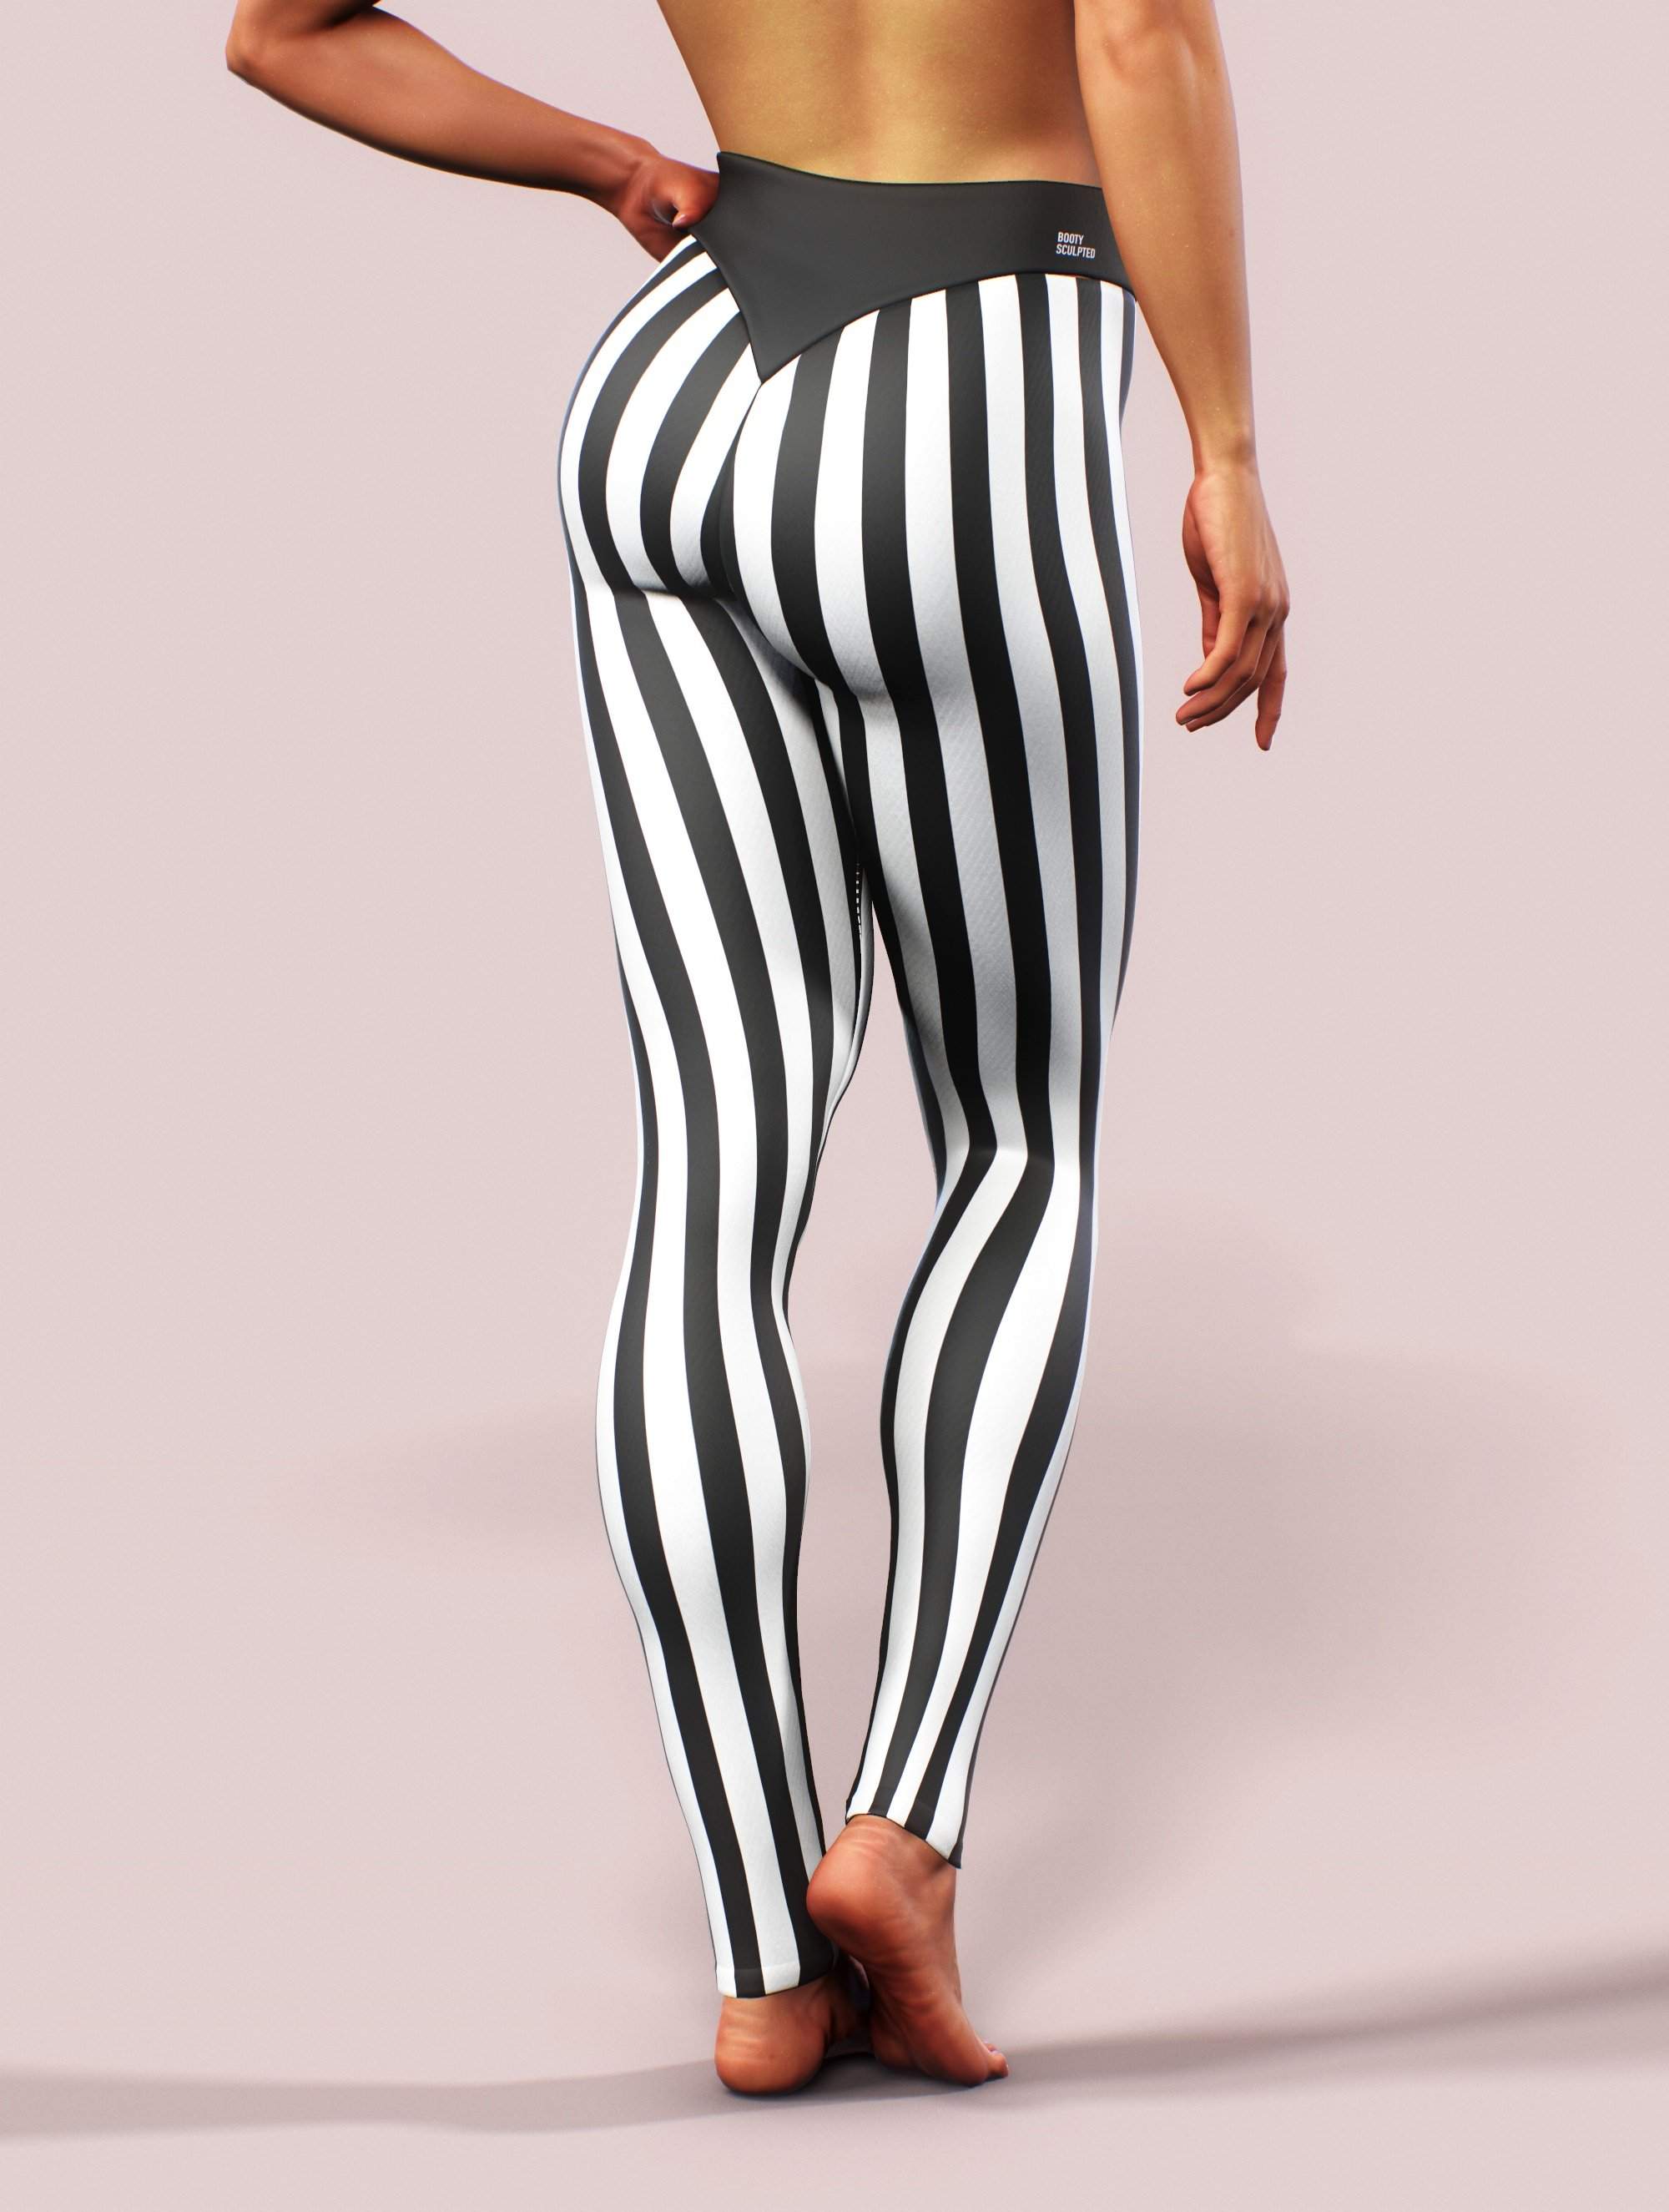 Bell Bottom Pants in Black/White Stripes Girls – Bee You Treasures